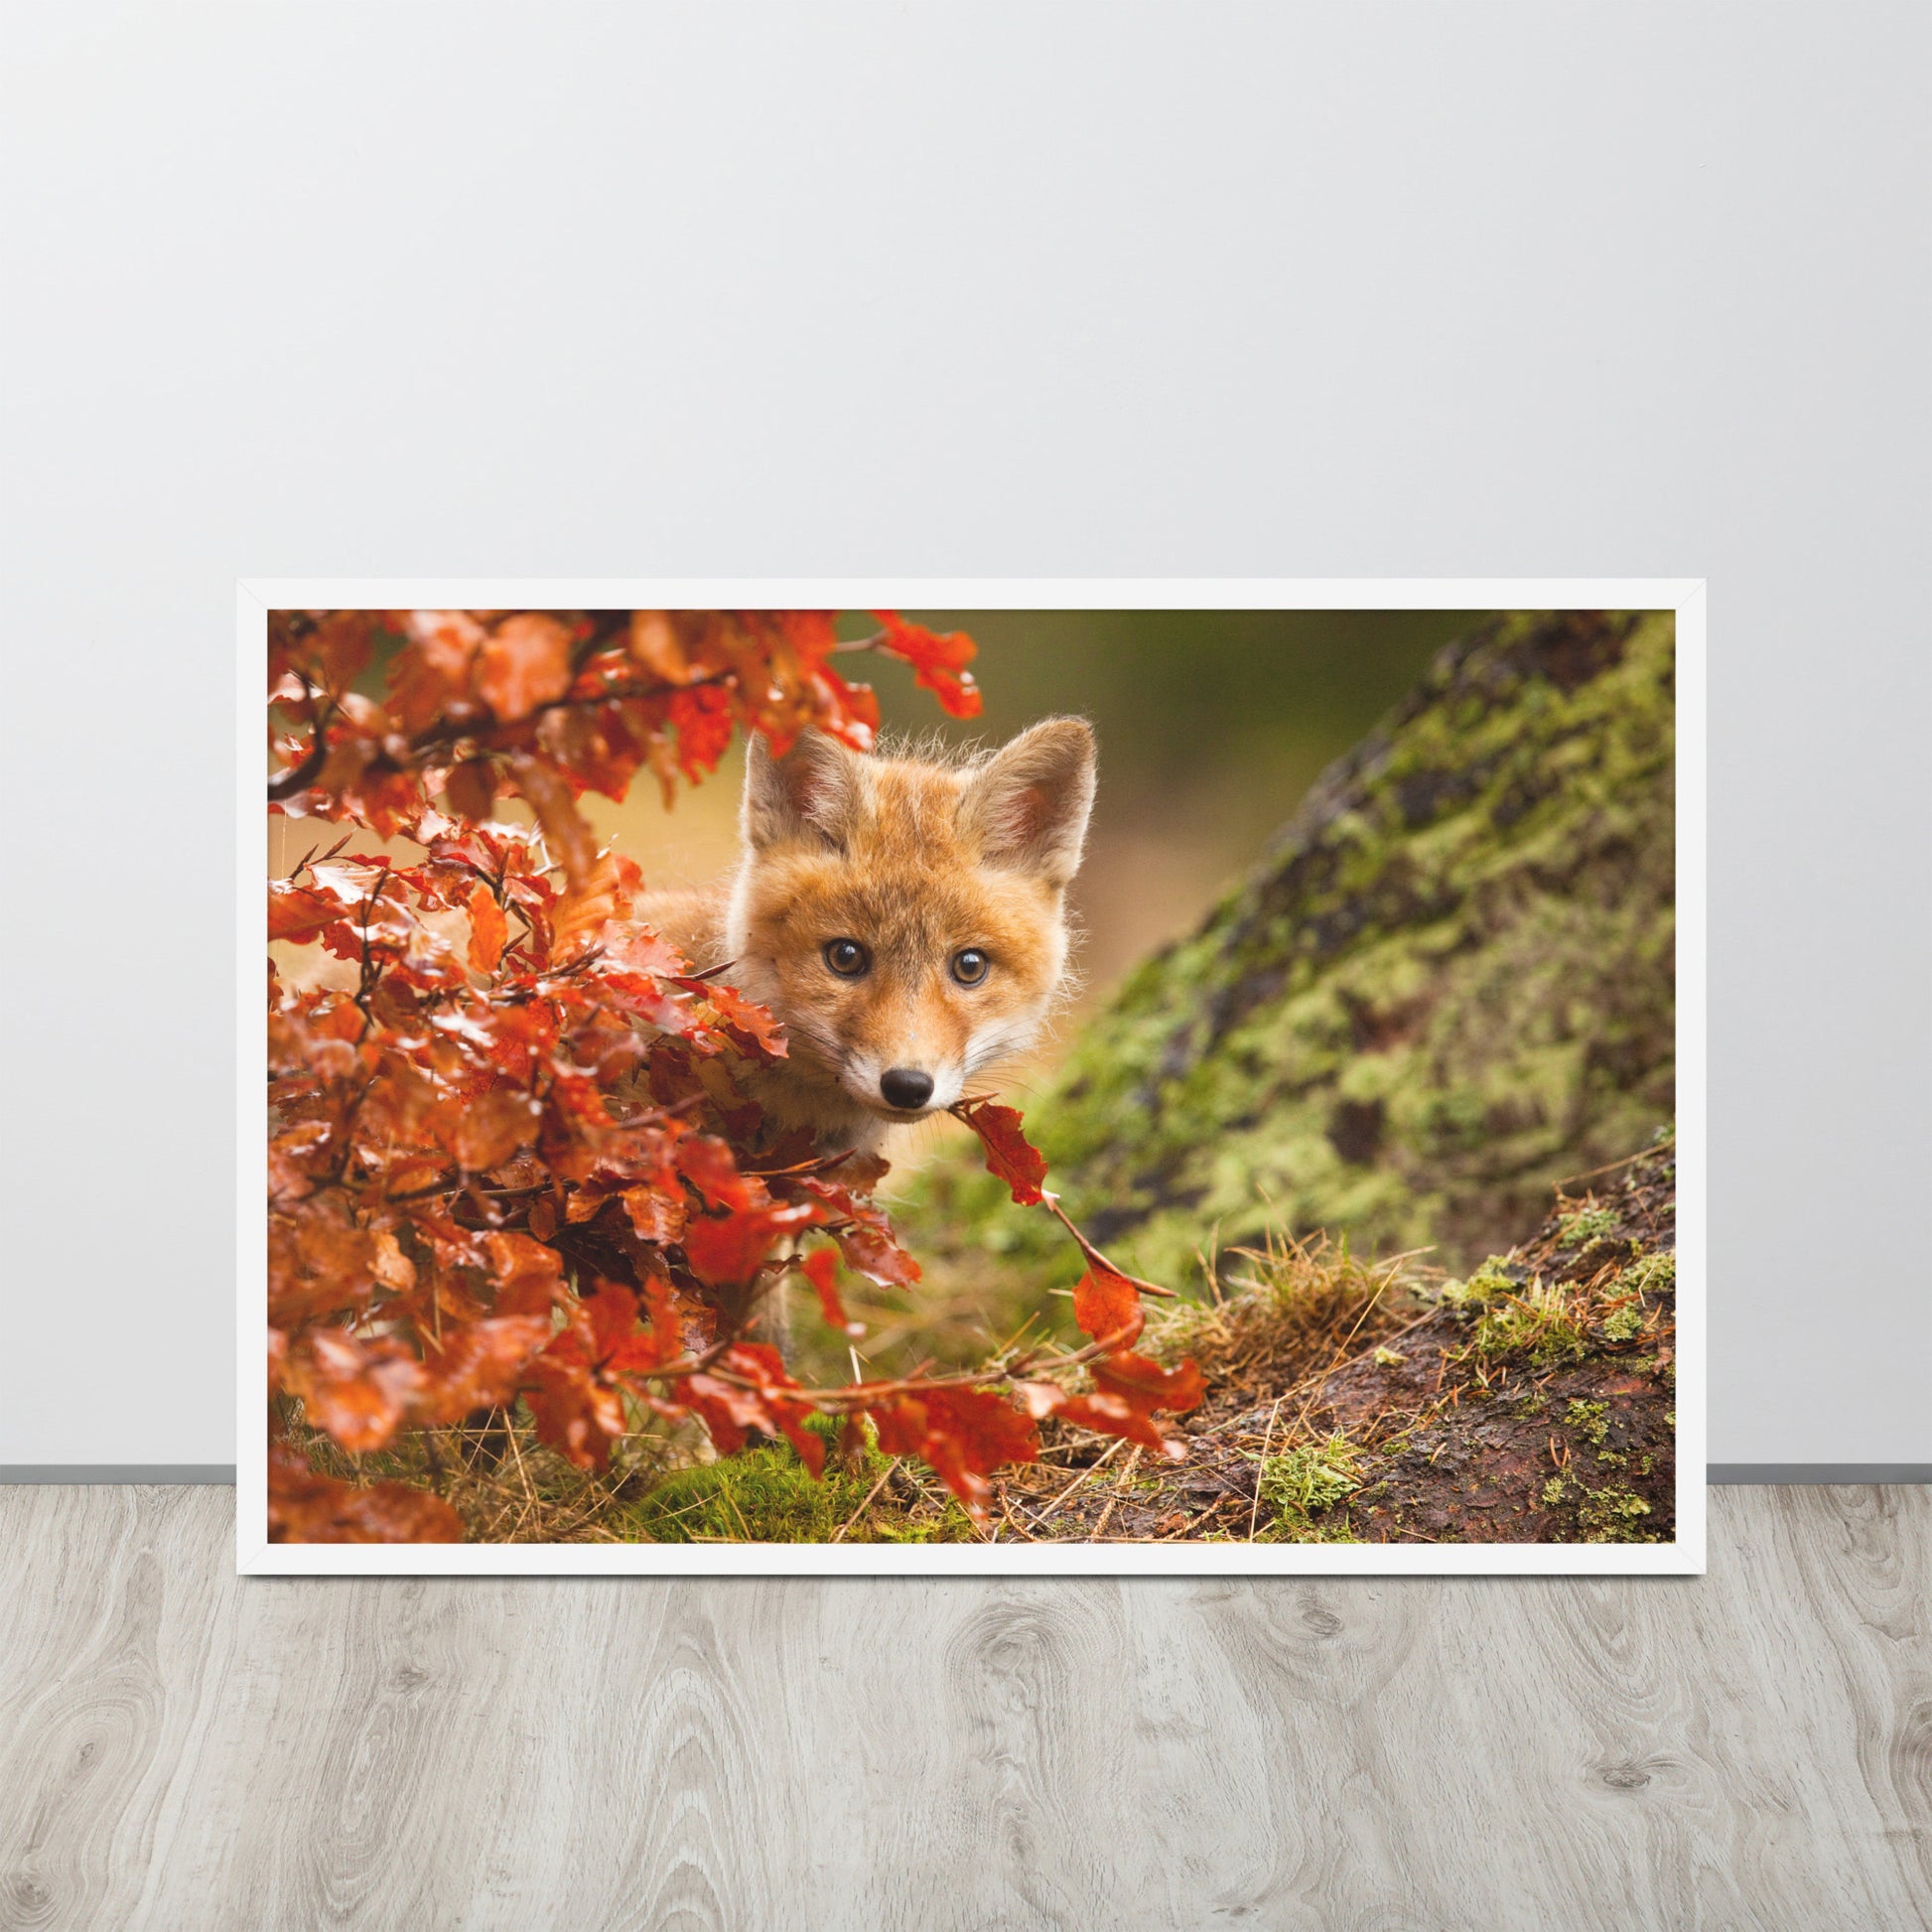 Woodland Animal Prints For Nursery: Peek-A-Boo Baby Fox Pup And Fall Leaves - Animal / Wildlife / Nature Artwork - Wall Decor - Framed Wall Art Print